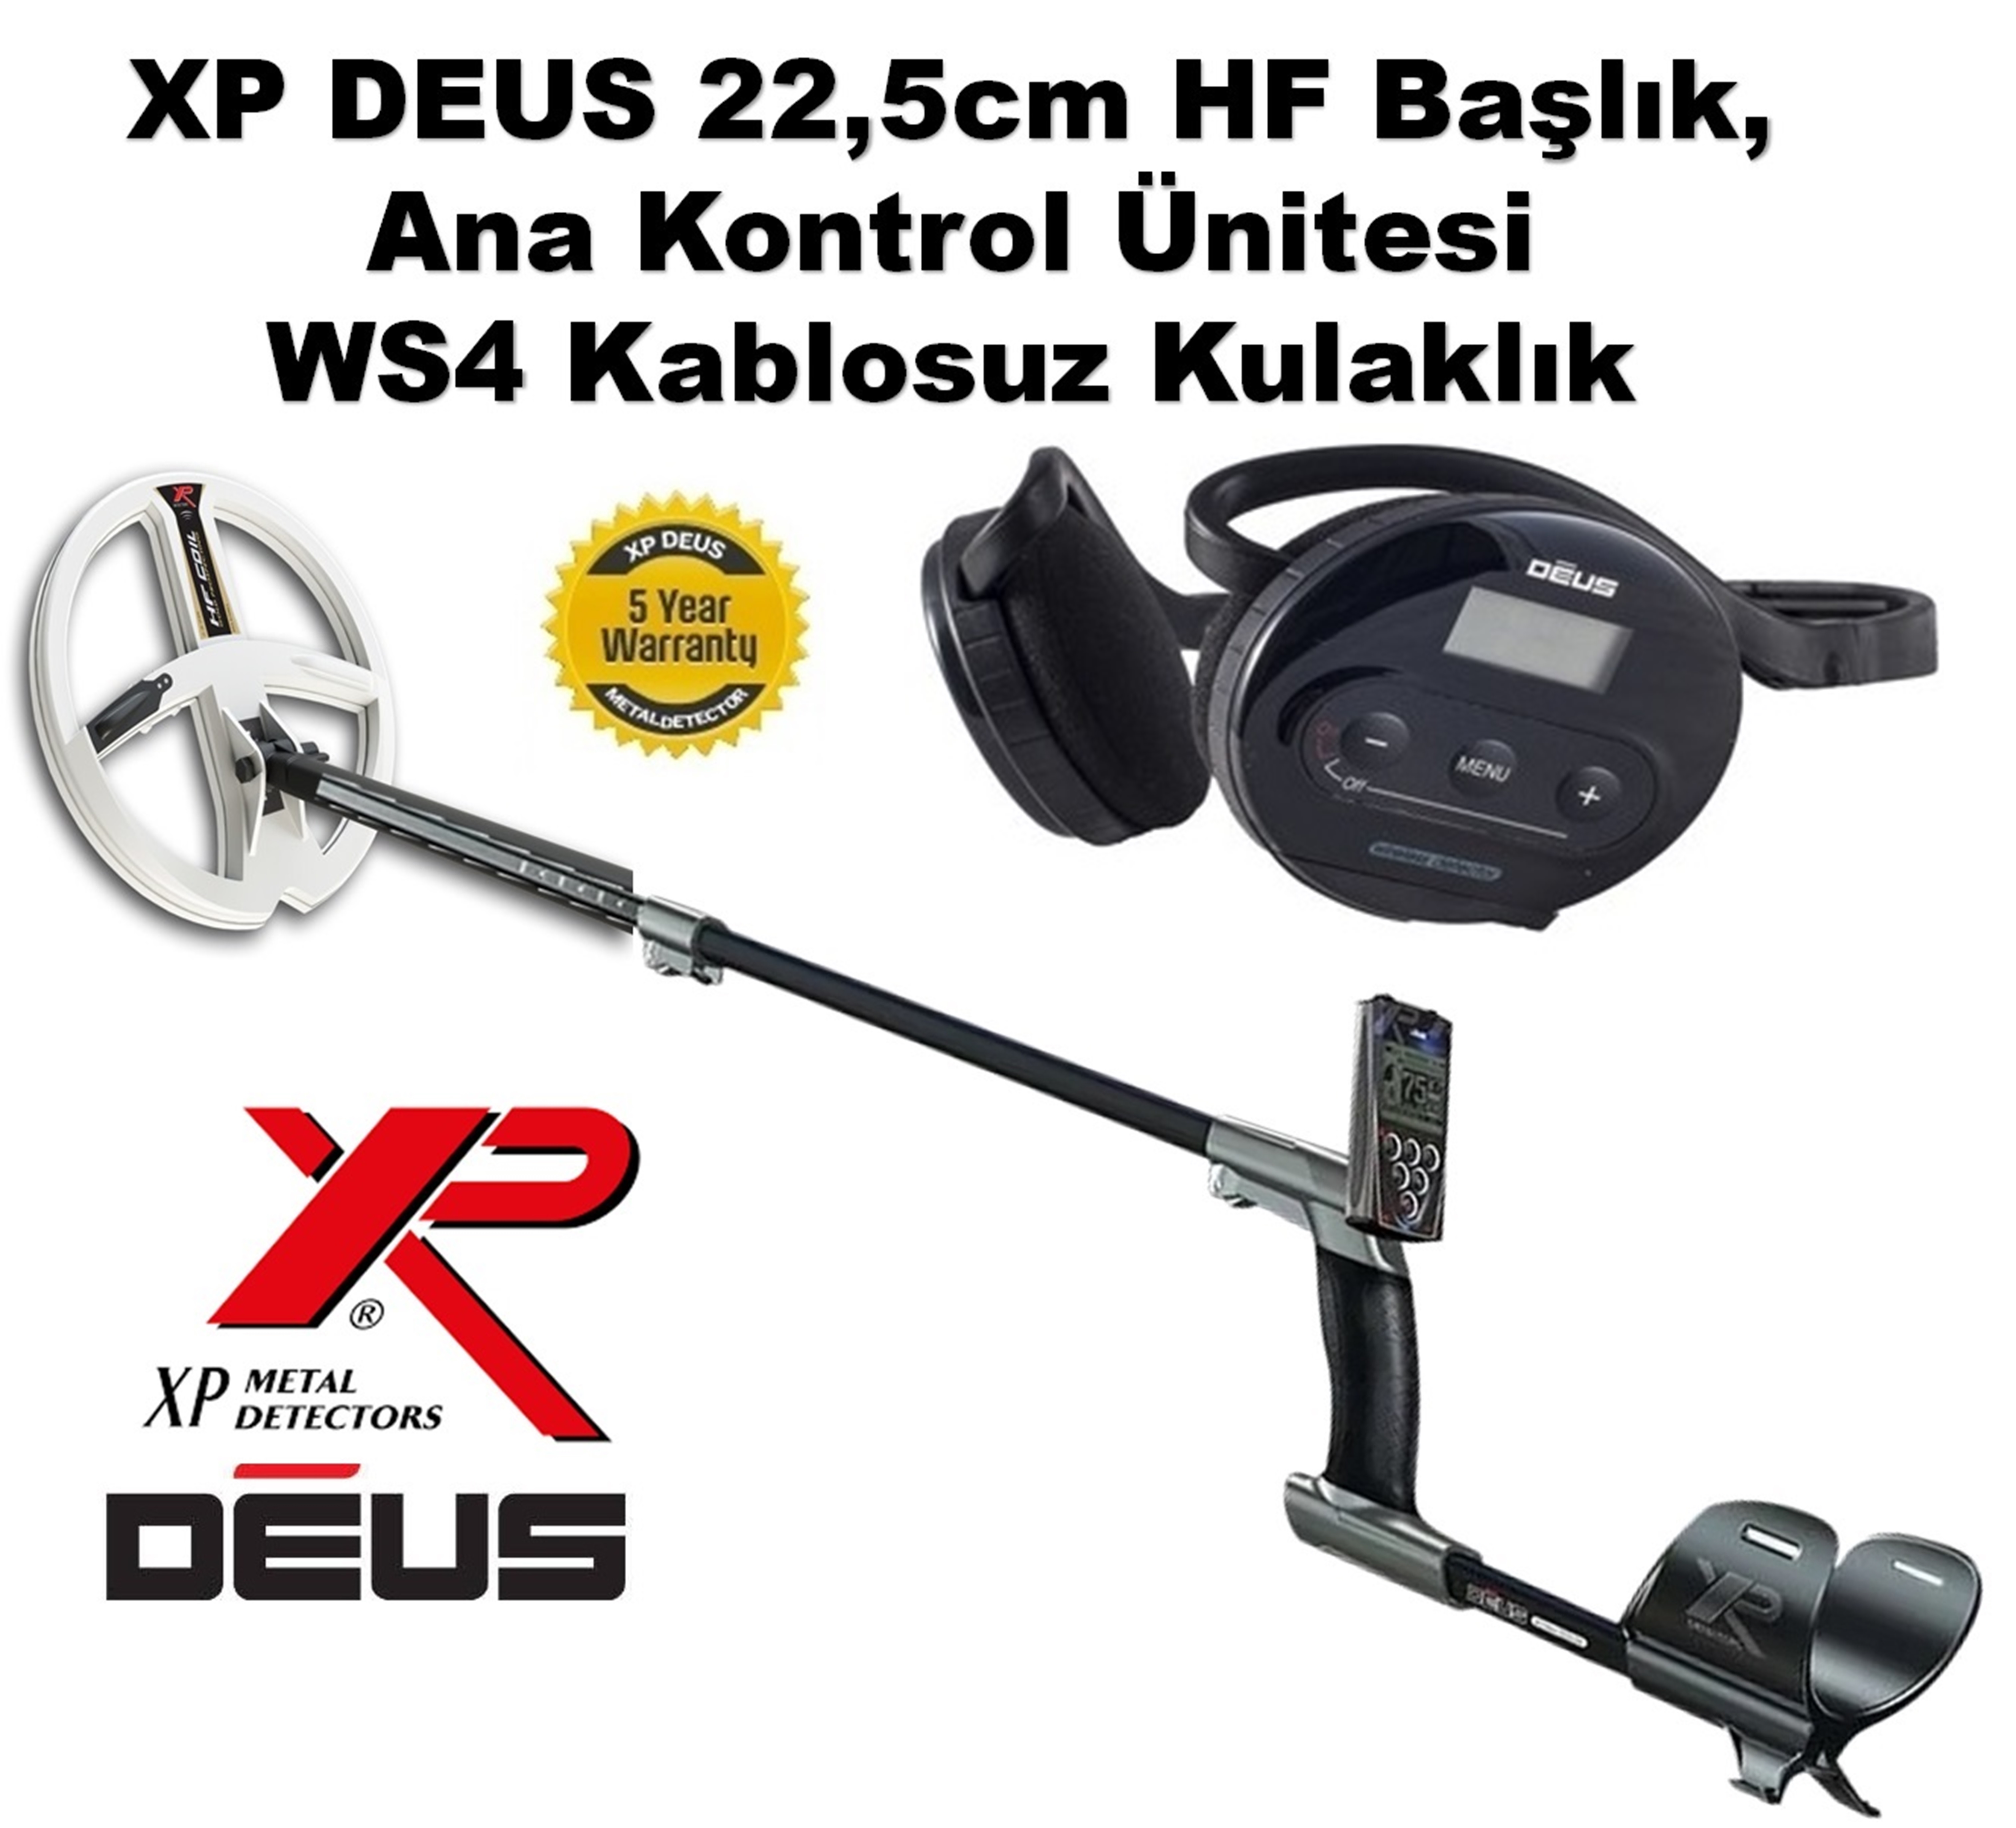 XP DEUS - 22,5cm HF Başlık, Ana Kontrol Ünitesi (RC), WS4 Kulaklık, FULL PAKET